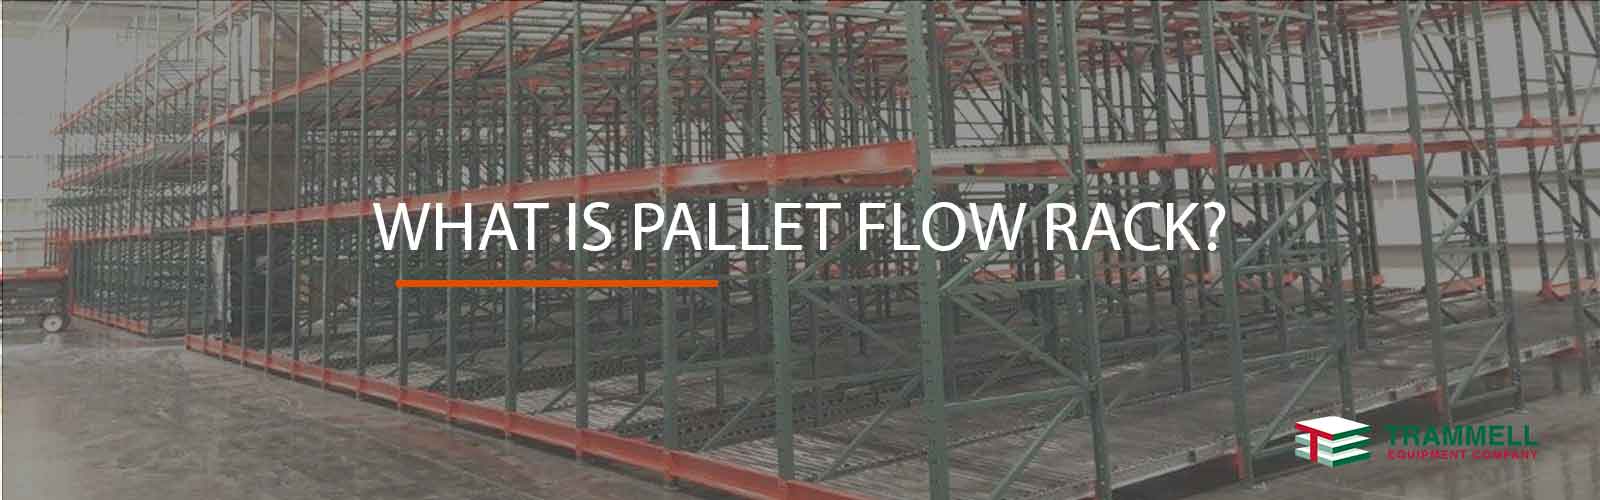 What is Pallet Flow Rack?